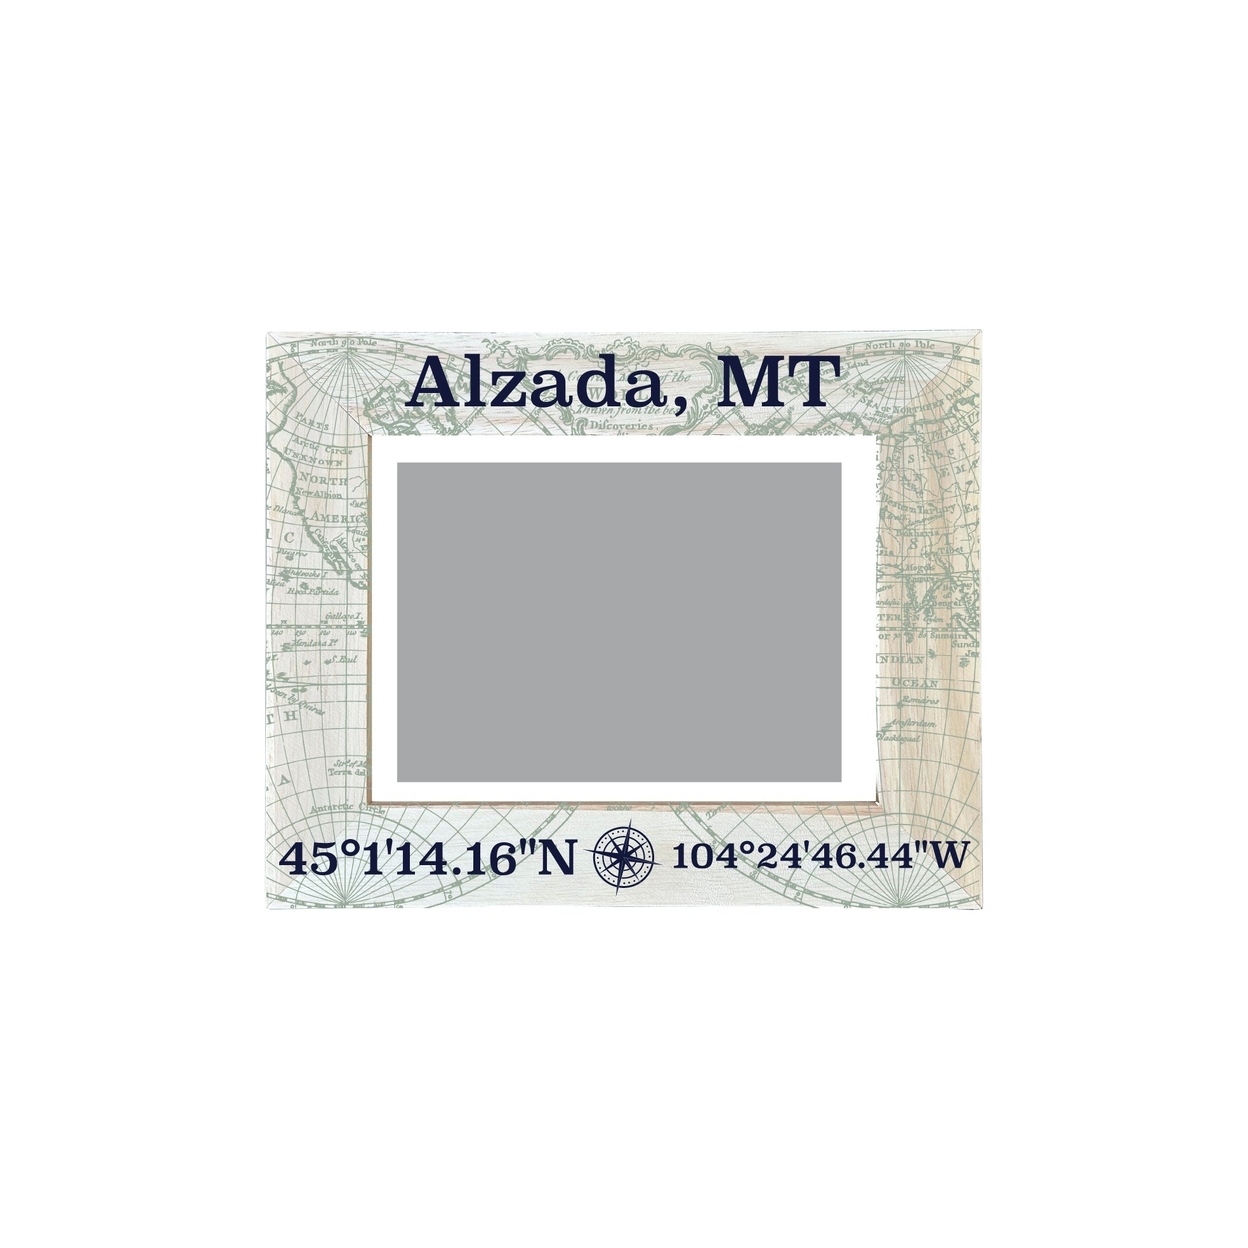 Alzada Montana Souvenir Wooden Photo Frame Compass Coordinates Design Matted To 4 X 6